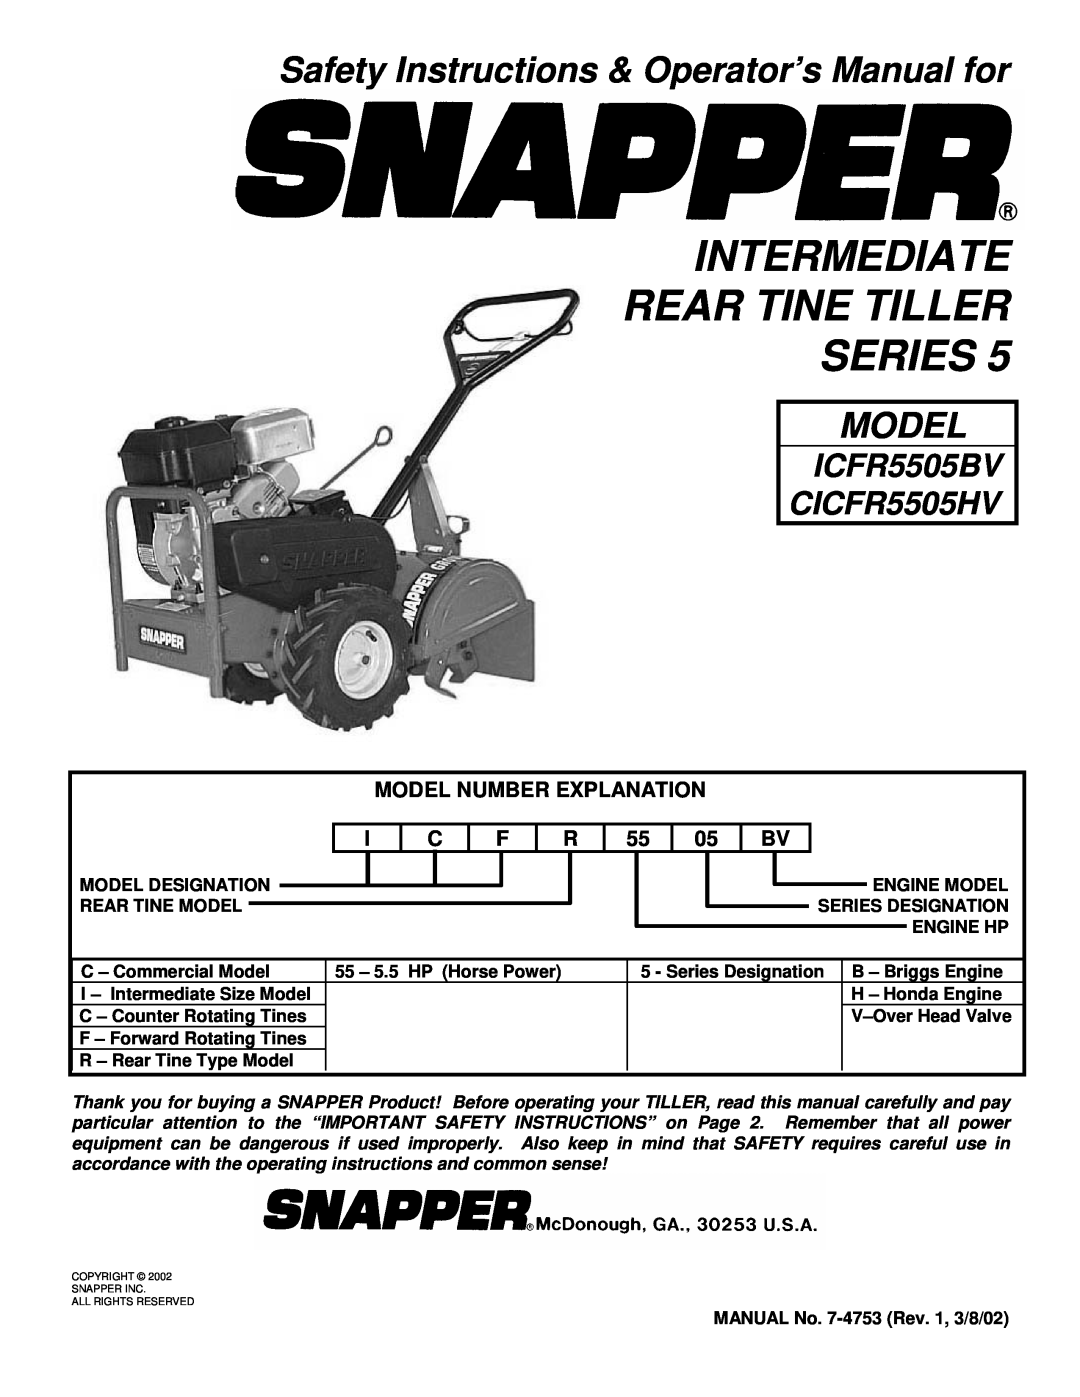 Snapper ICFR7005BV, CICFR5505HV important safety instructions Intermediate Rear Tine Tiller Series, Model 